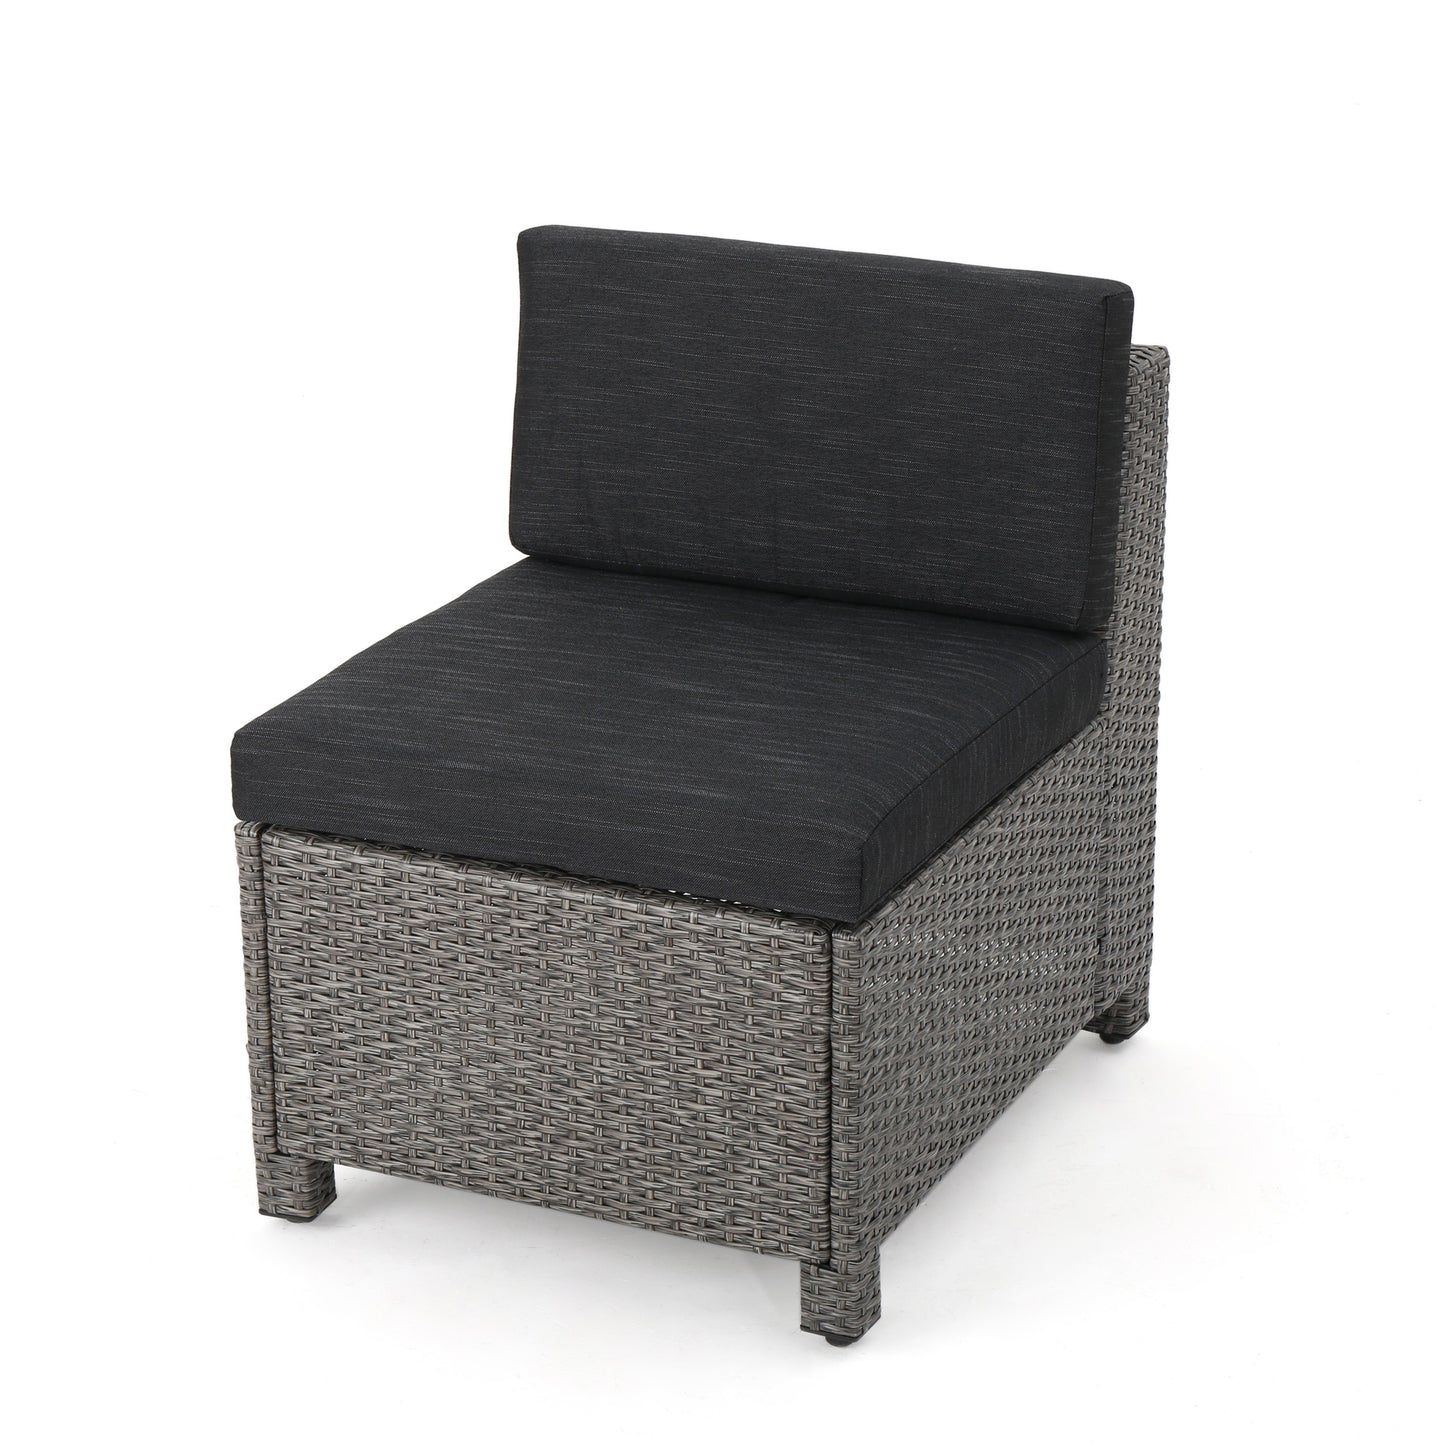 Lorita Outdoor 5-piece Grey Wicker Sectional Sofa Set with Black Cushions